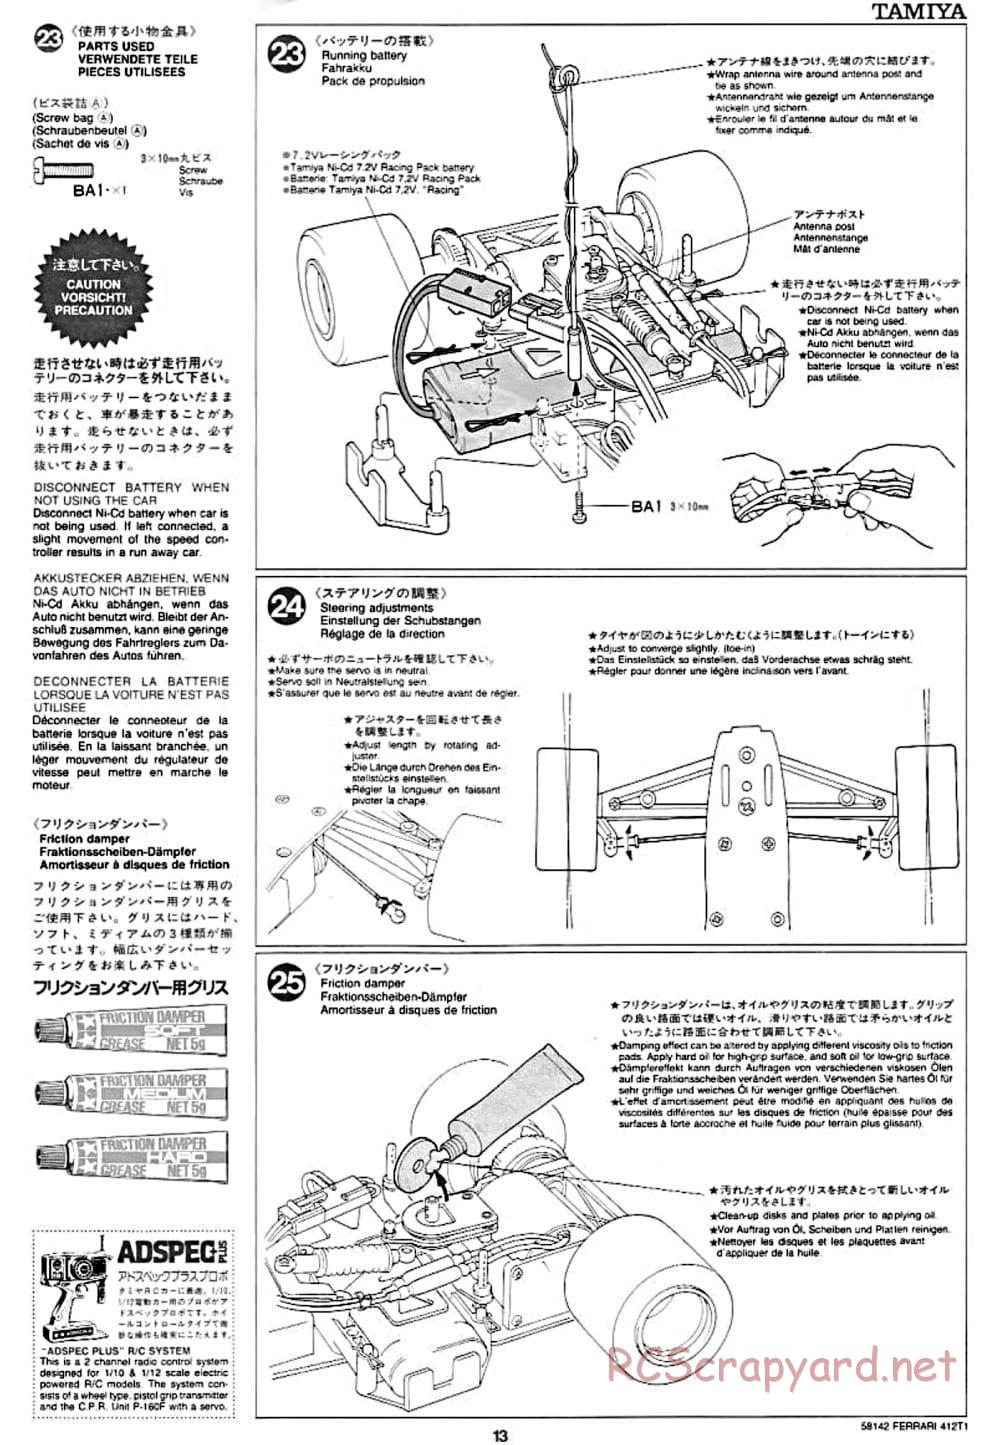 Tamiya - Ferrari 412T1 - F103 Chassis - Manual - Page 13